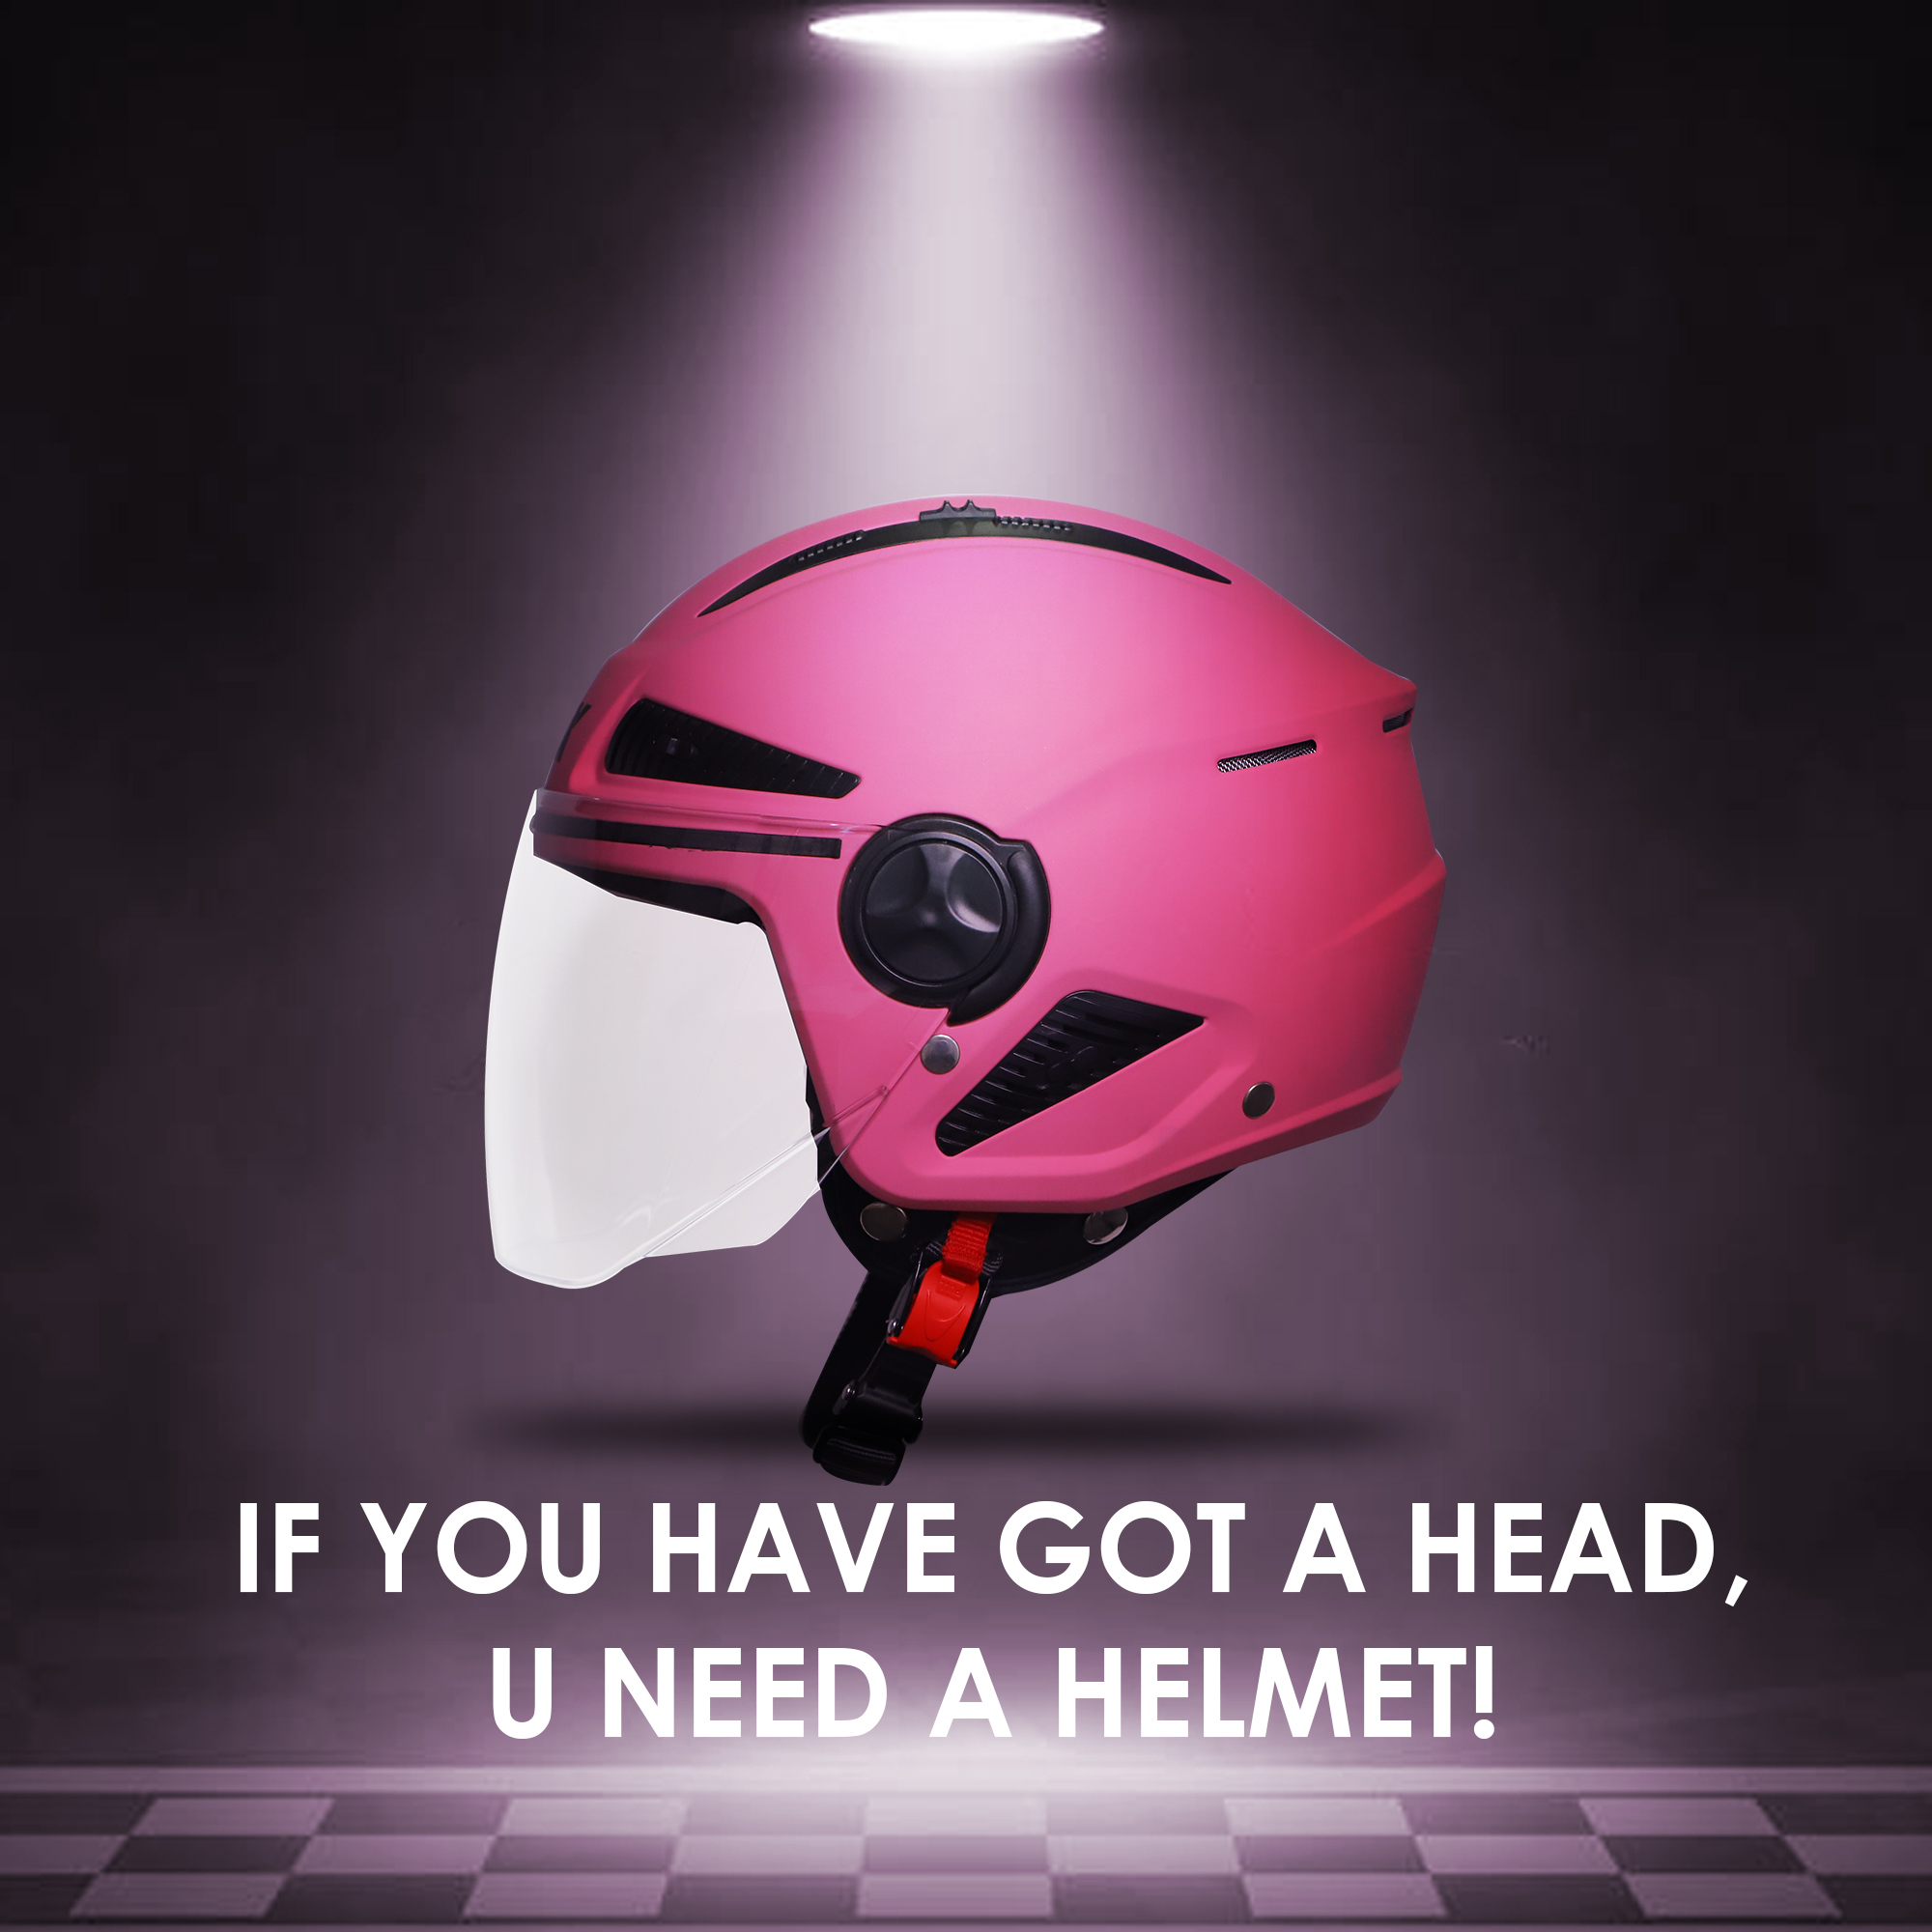 Steelbird SBH-24 Boxx ISI Certified Open Face Helmet For Men And Women (Matt Dark Pink With Clear Visor)